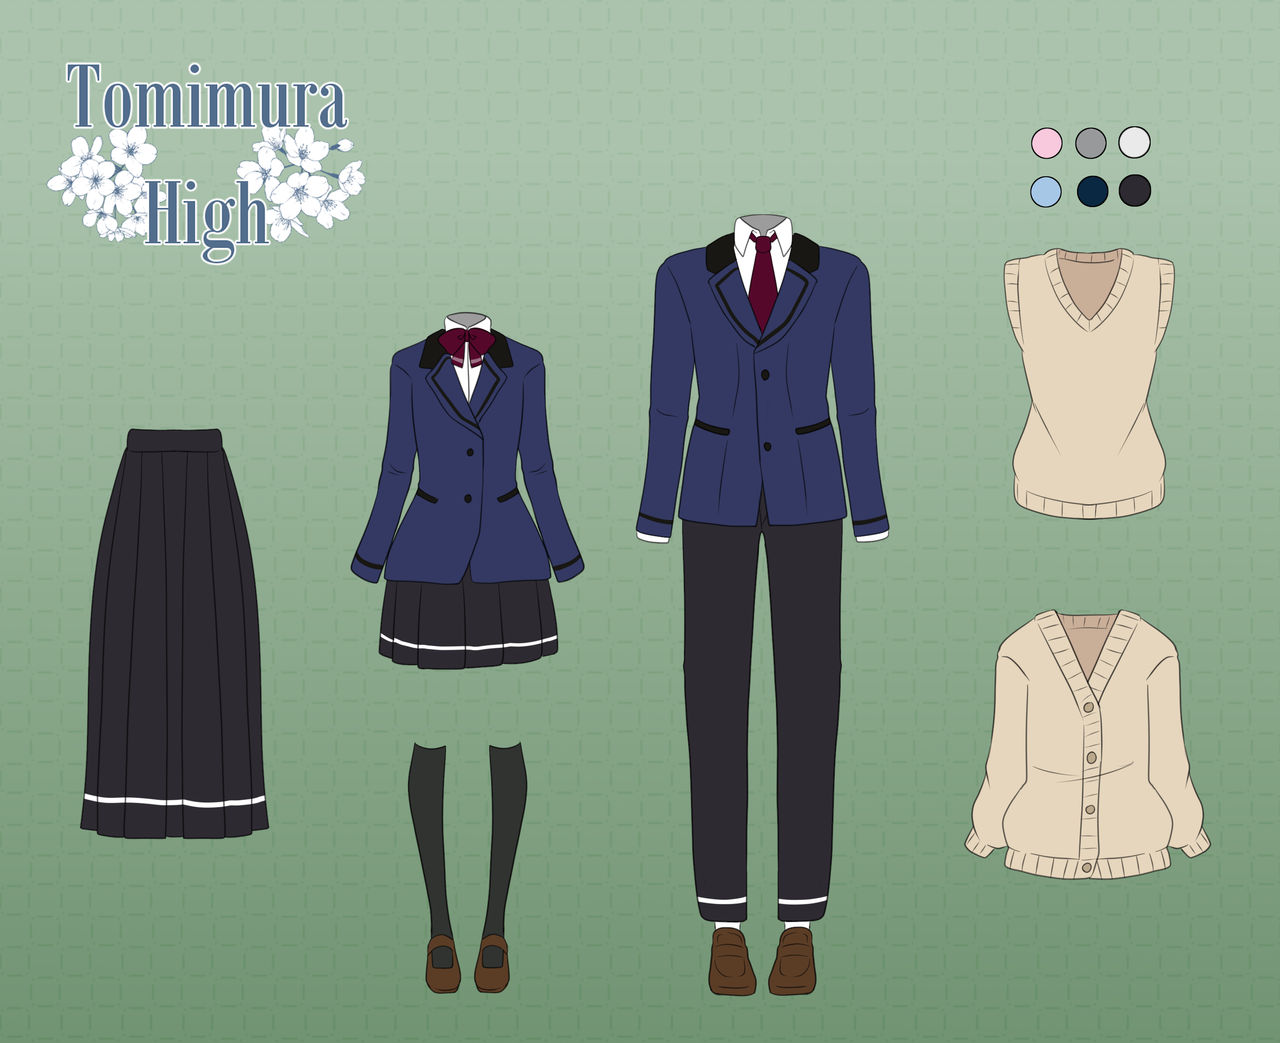 Tomimura Uniforms by Tomi-mura on DeviantArt